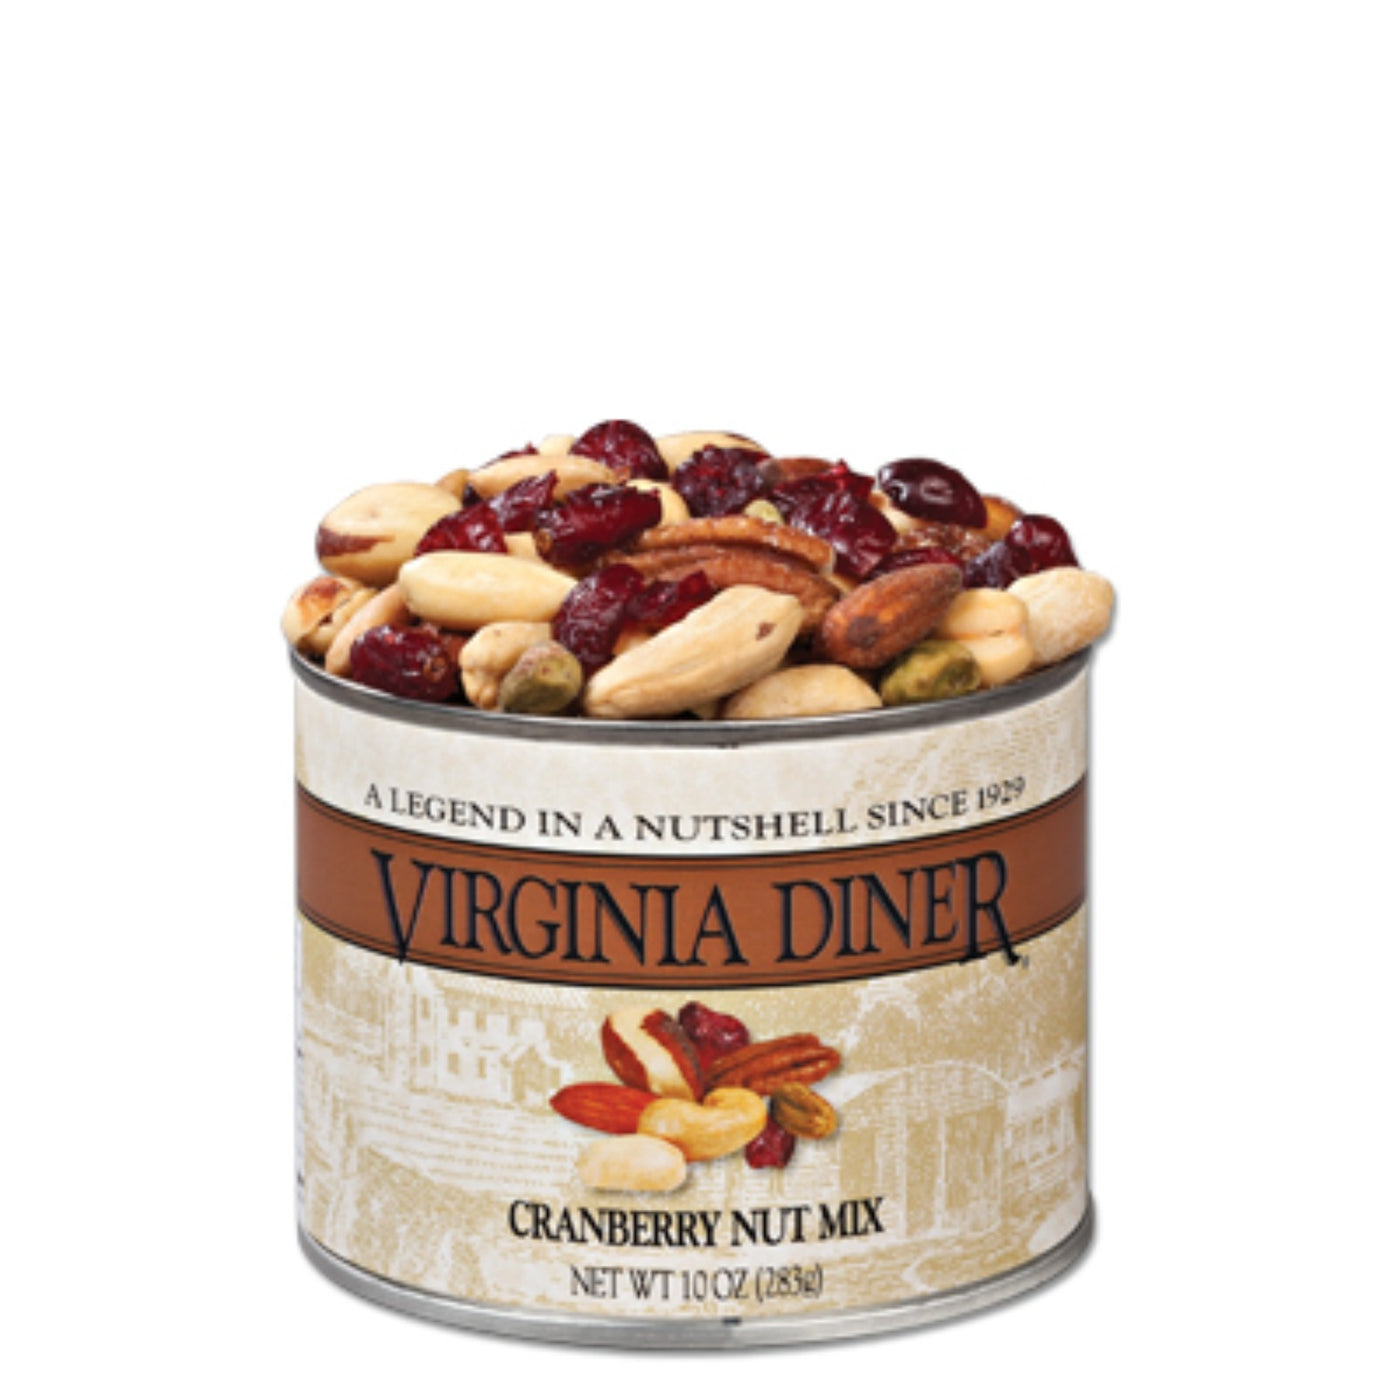 NUTS - Virginia Diner - Cranberry Nut Mix